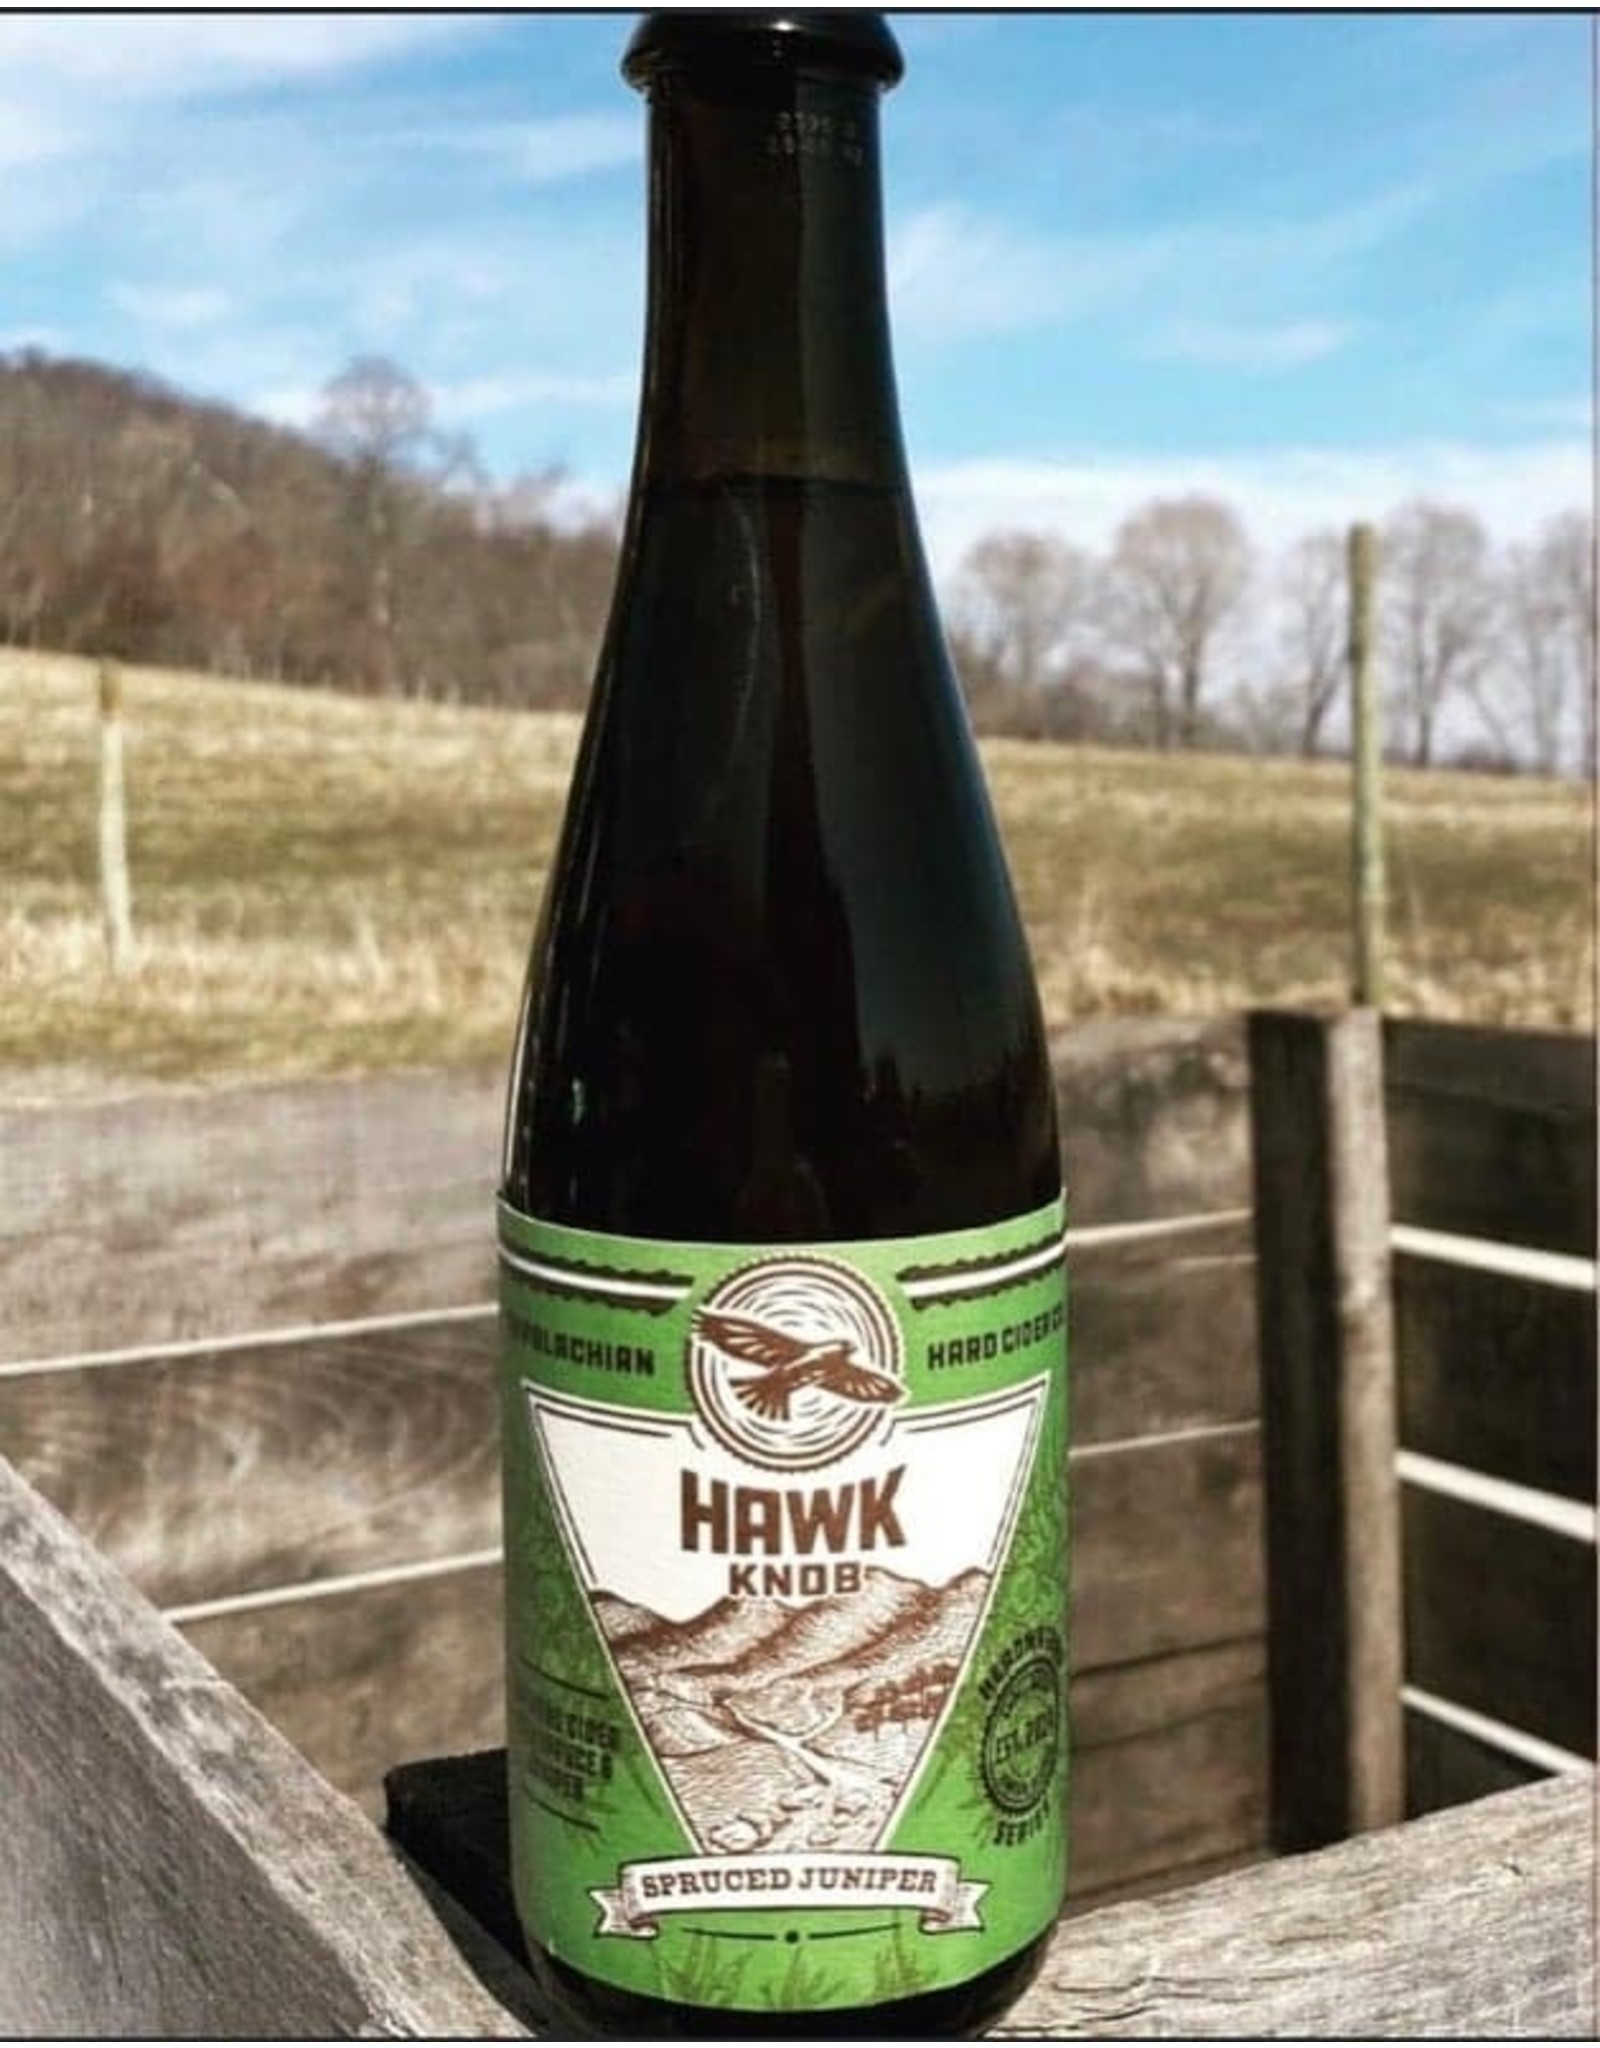 Hawk Knob Hawk Knob Hard Cider, Spruced Juniper